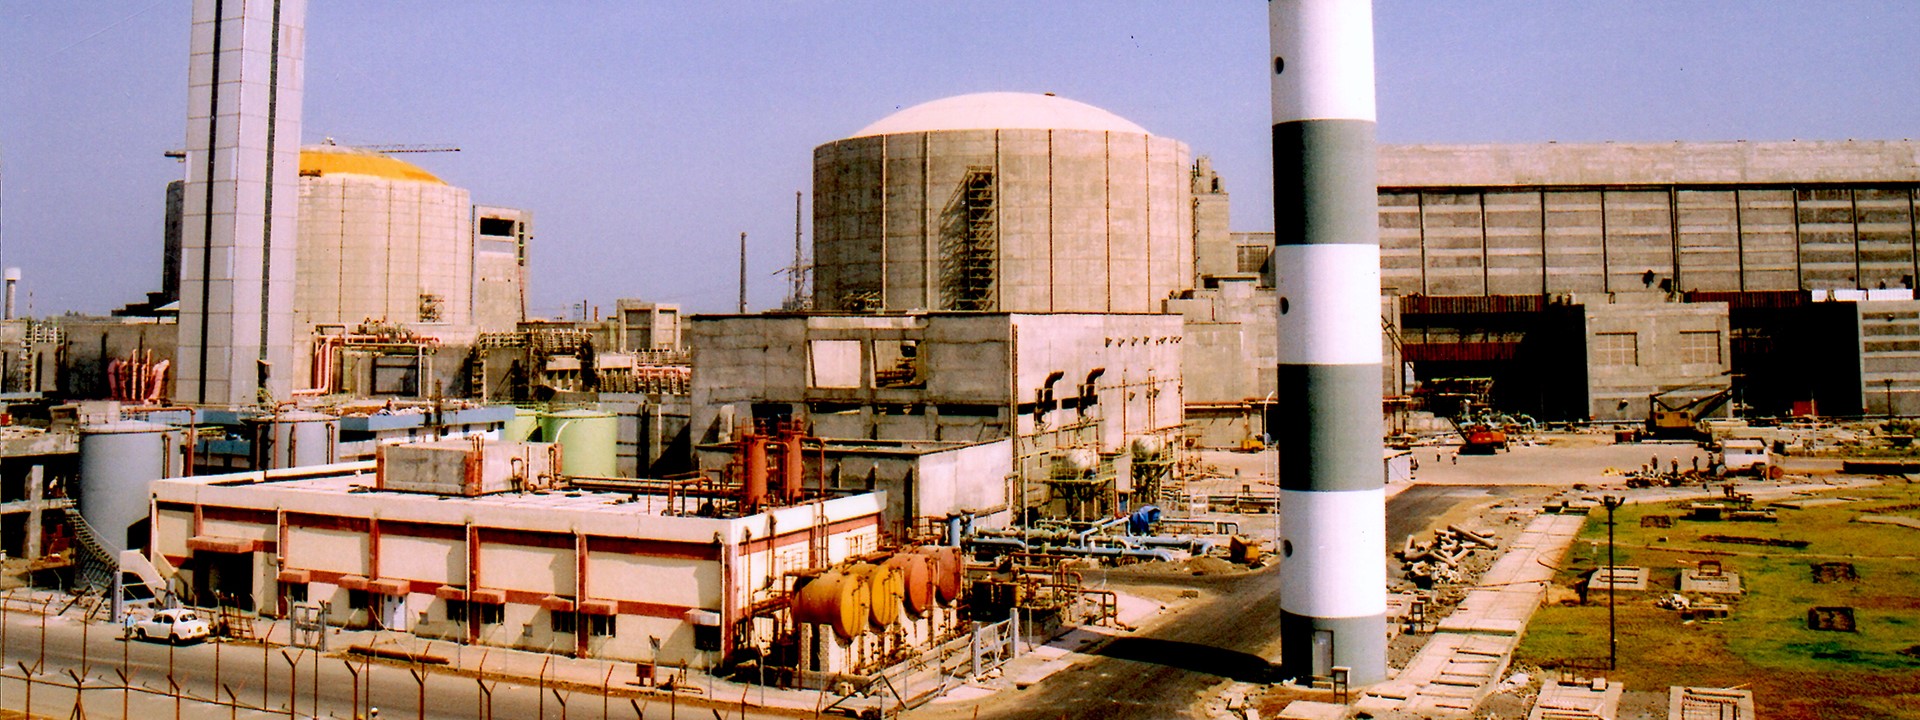 Atomic Power plant in Tarapur- L&T Construction